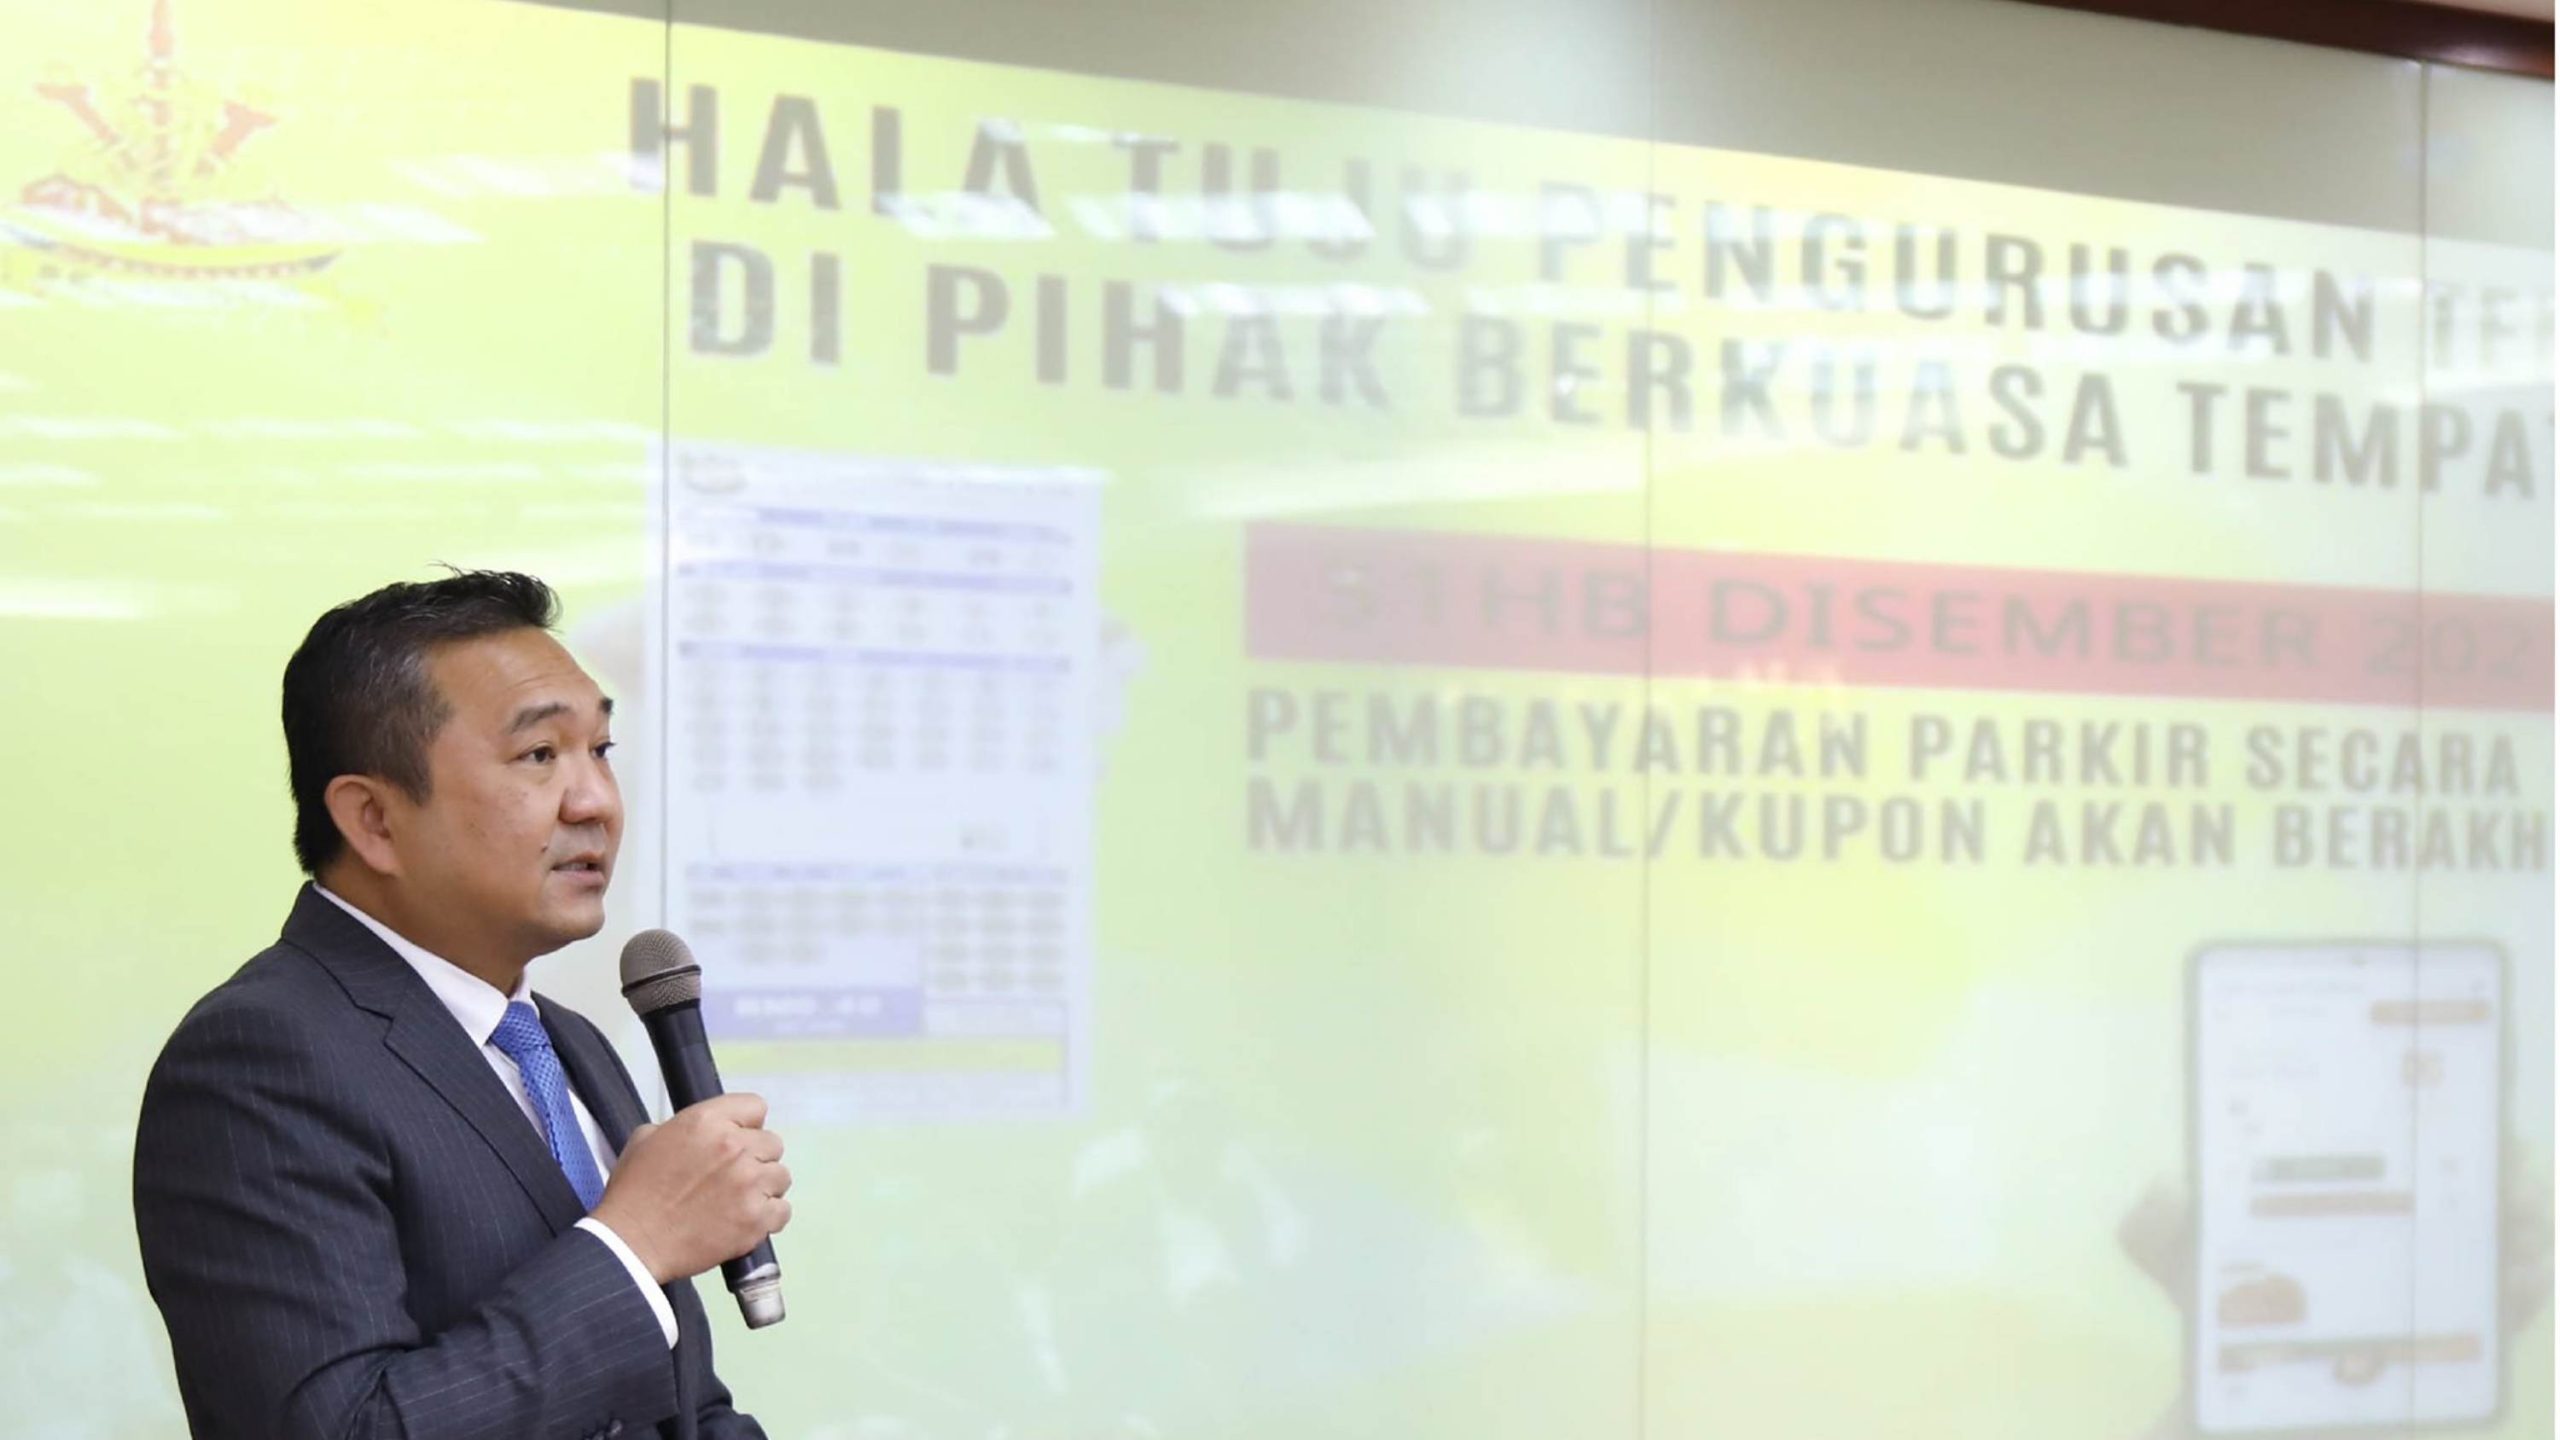 Selangor Tamatkan Pembayaran Parkir Secara Kupon Pada 31 Disember 2021 – Pembayaran Melalui Aplikasi Sepenuhnya 2022